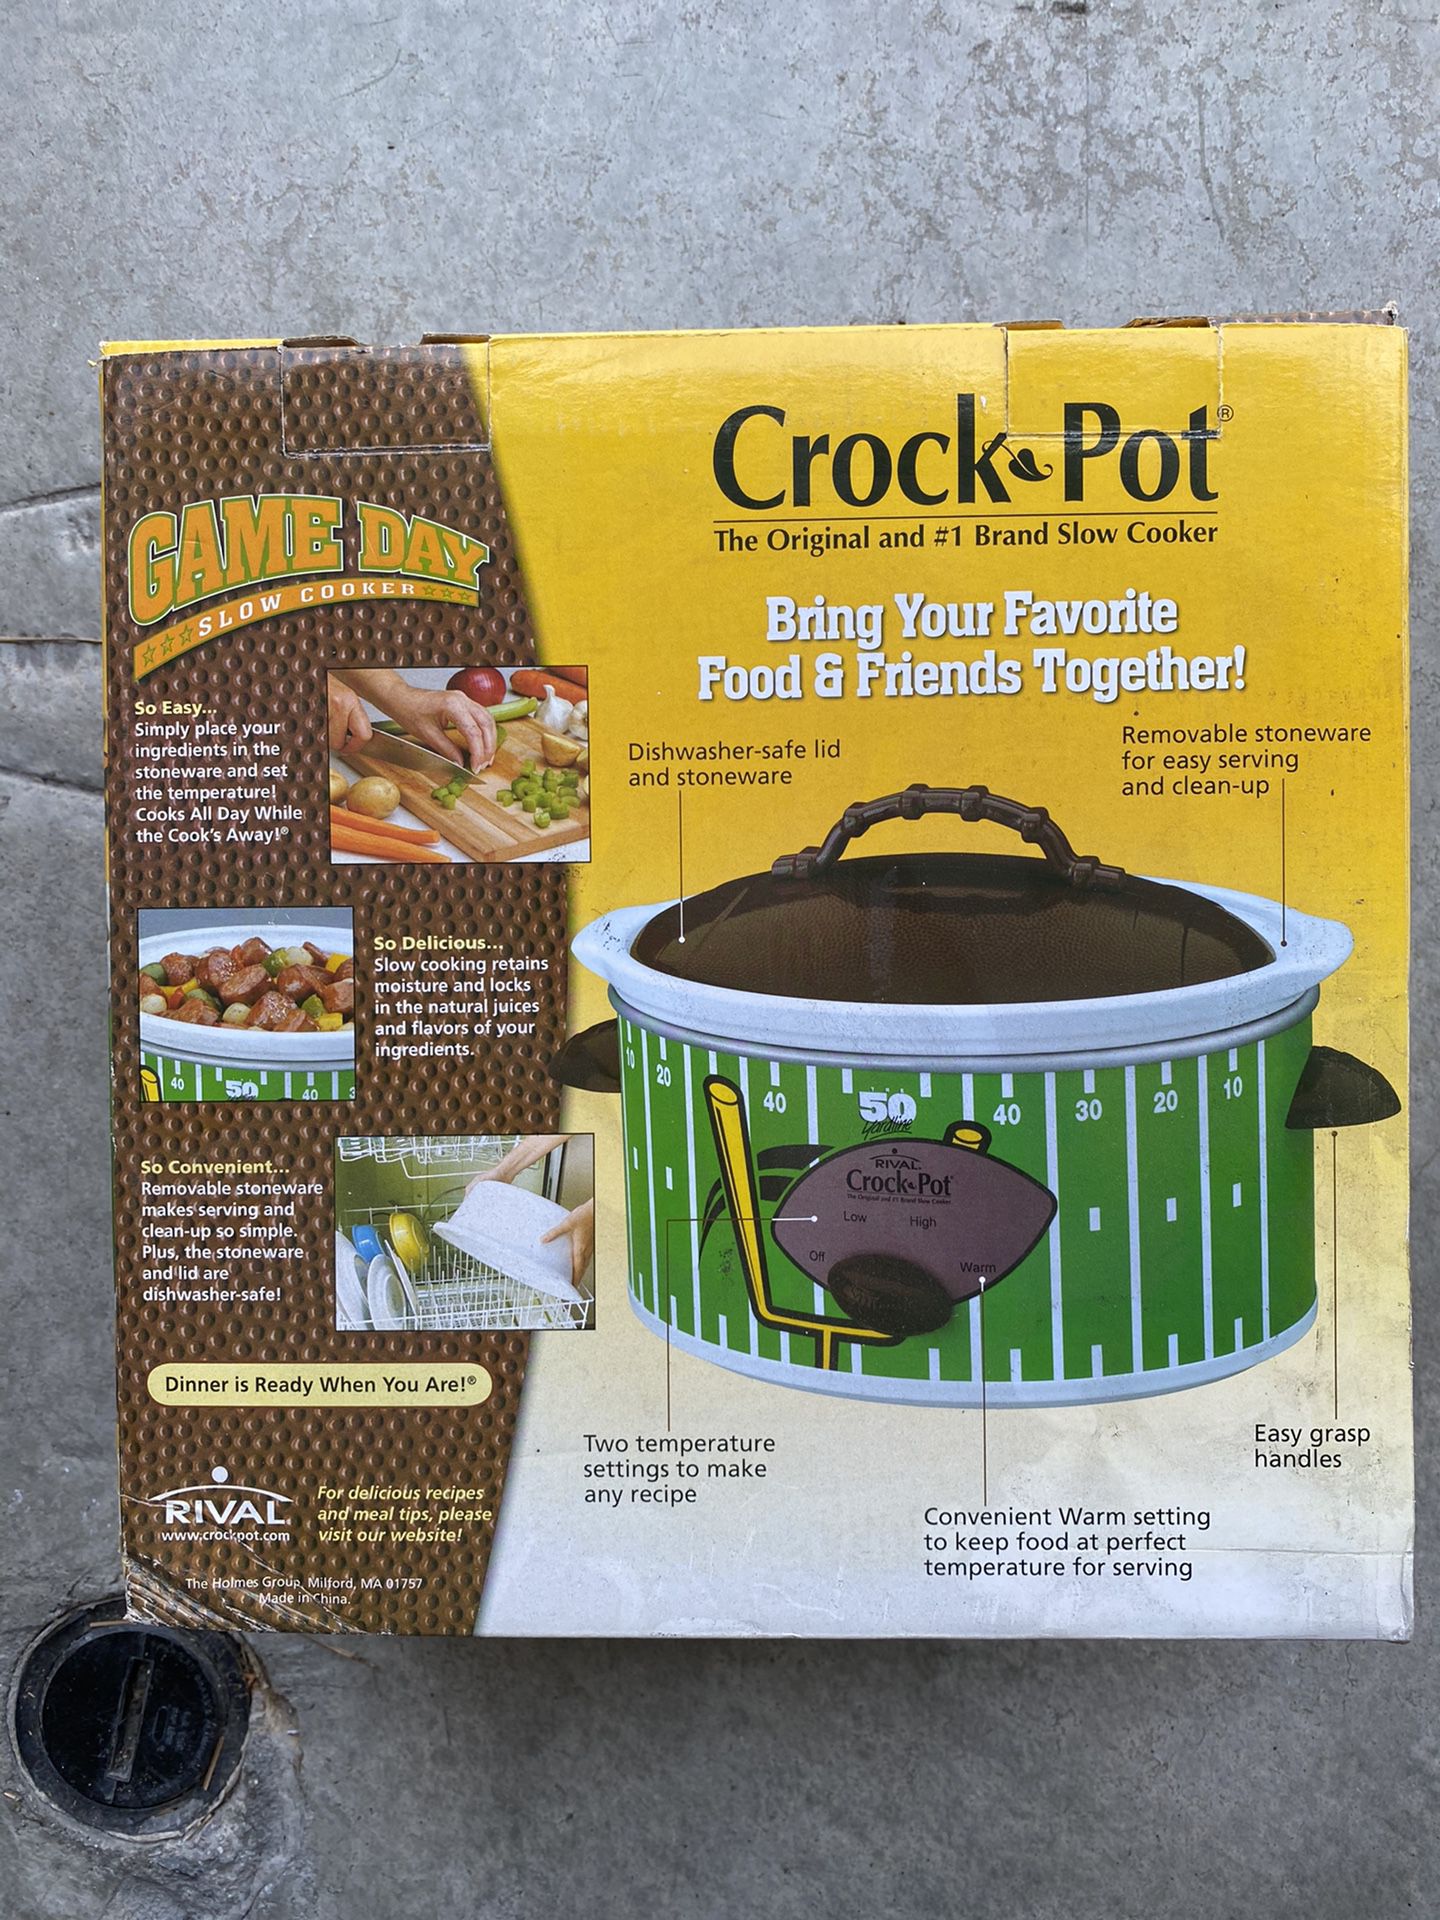 Brand new 3 quart Crock Pot slow cooker